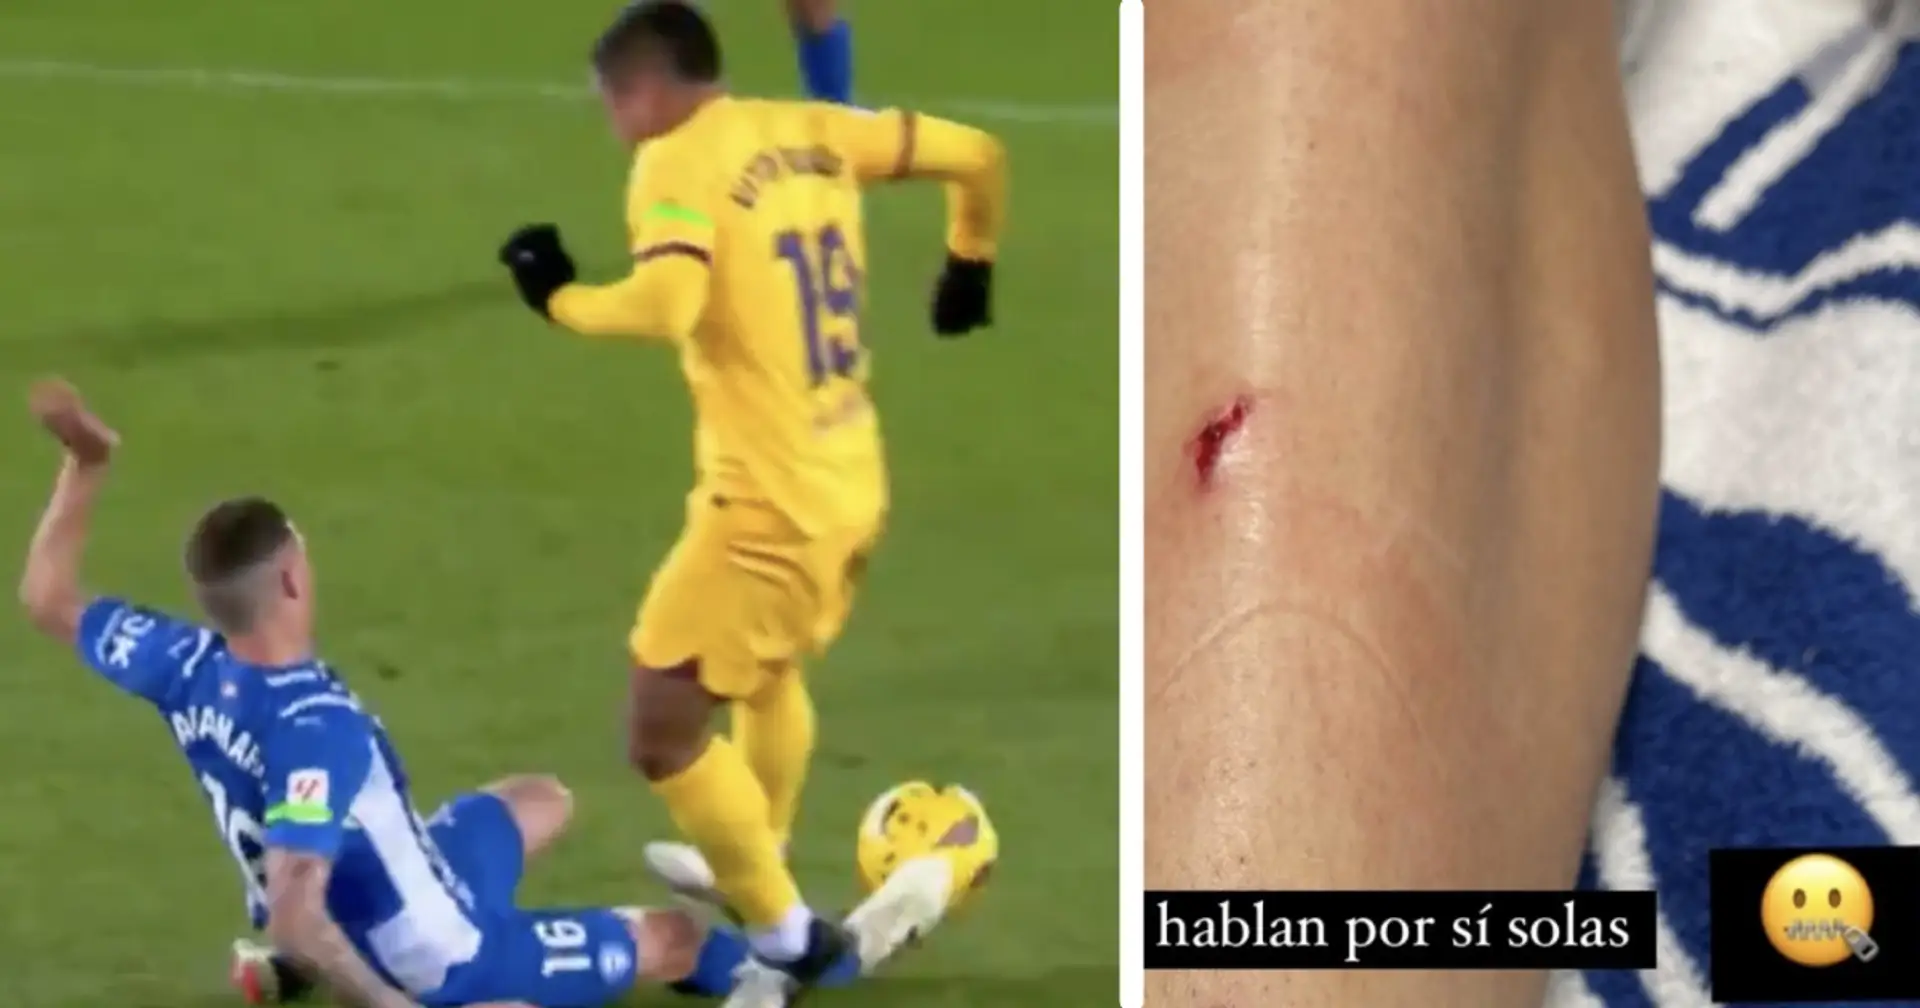 El defensa del Alavés, cedido del Real Madrid, muestra la pierna lesionada tras la polémica tarjeta roja de Vitor Roque